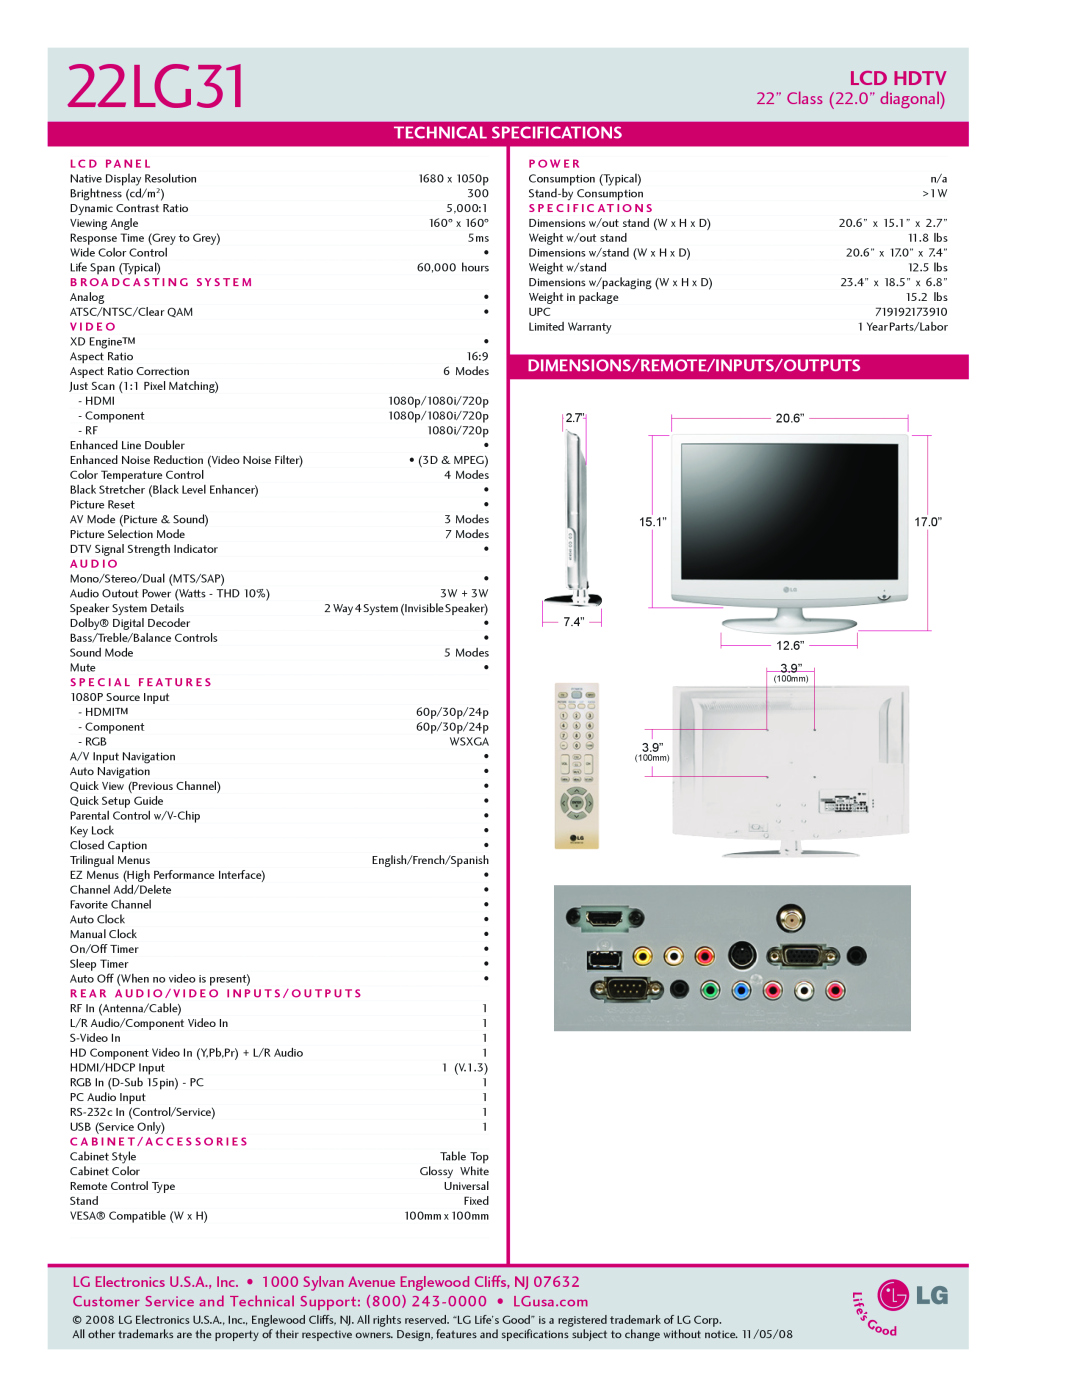 LG Electronics 2231 manual 22LG31, Lcd Hdtv, 22” Class 22.0” diagonal, Technical, Specifications, L C D Pa N E L, P O W E R 